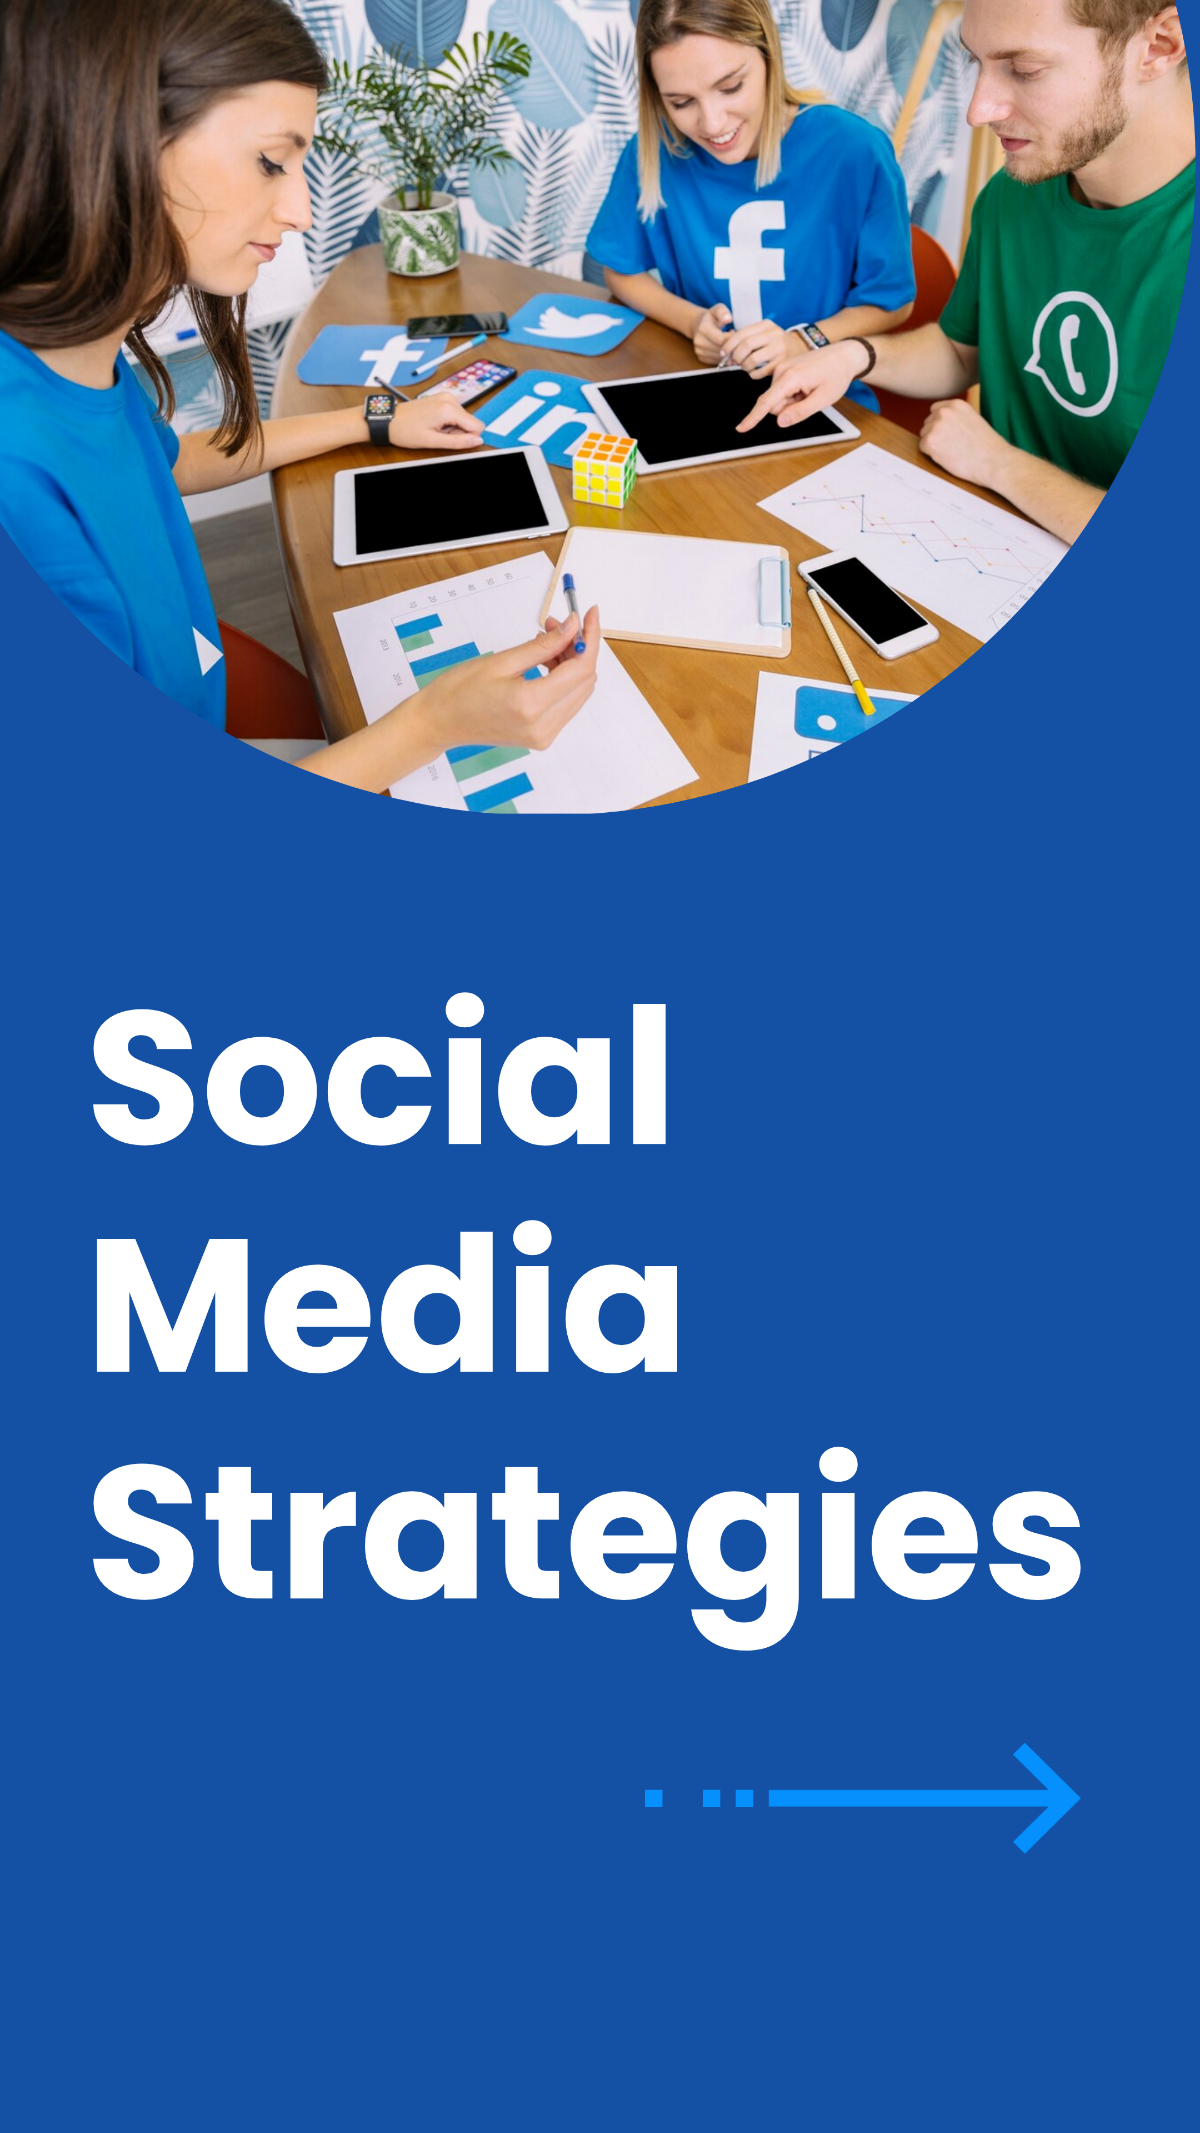 Social Media Strategy Carousel Instagram Post Template